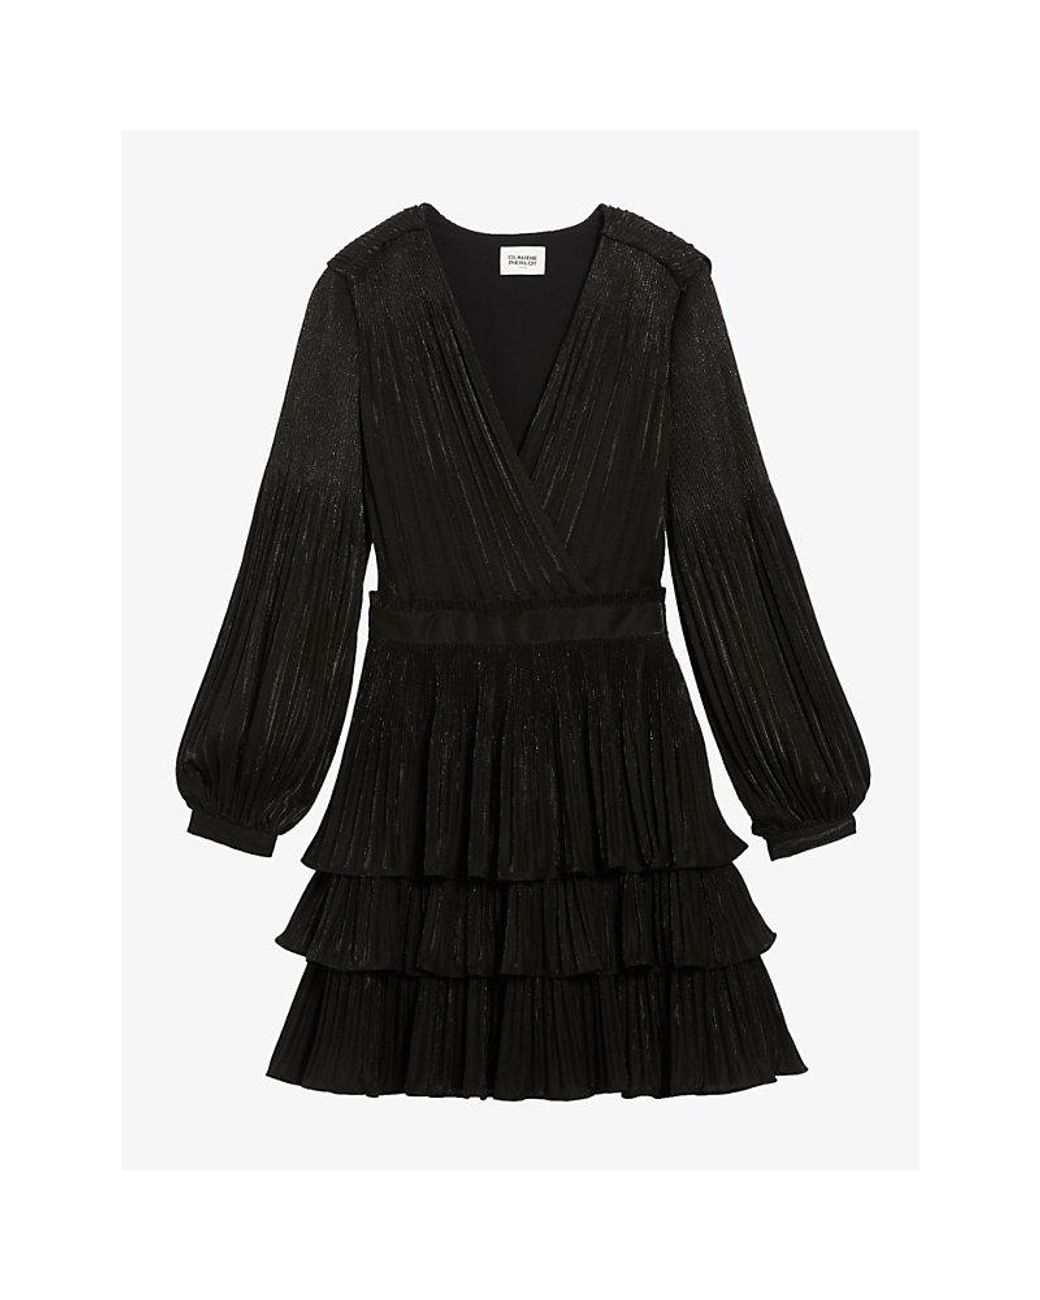 Claudie Pierlot Romance Tiered-skirt Woven Mini Dress in Black | Lyst